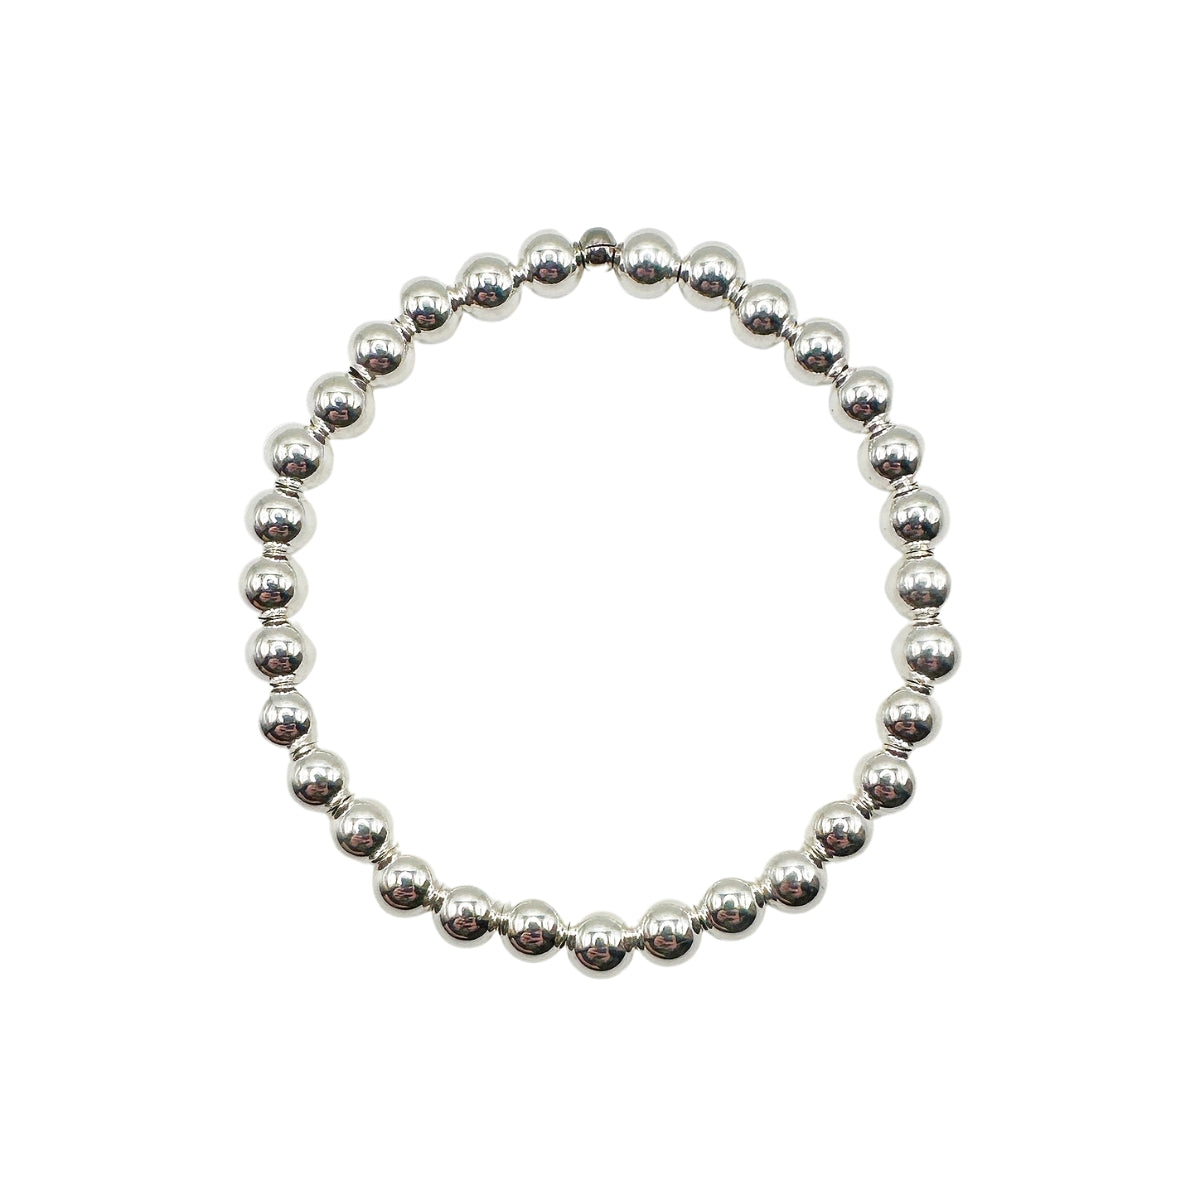 Featherly sterling silver 6mm stretch beaded bracelet